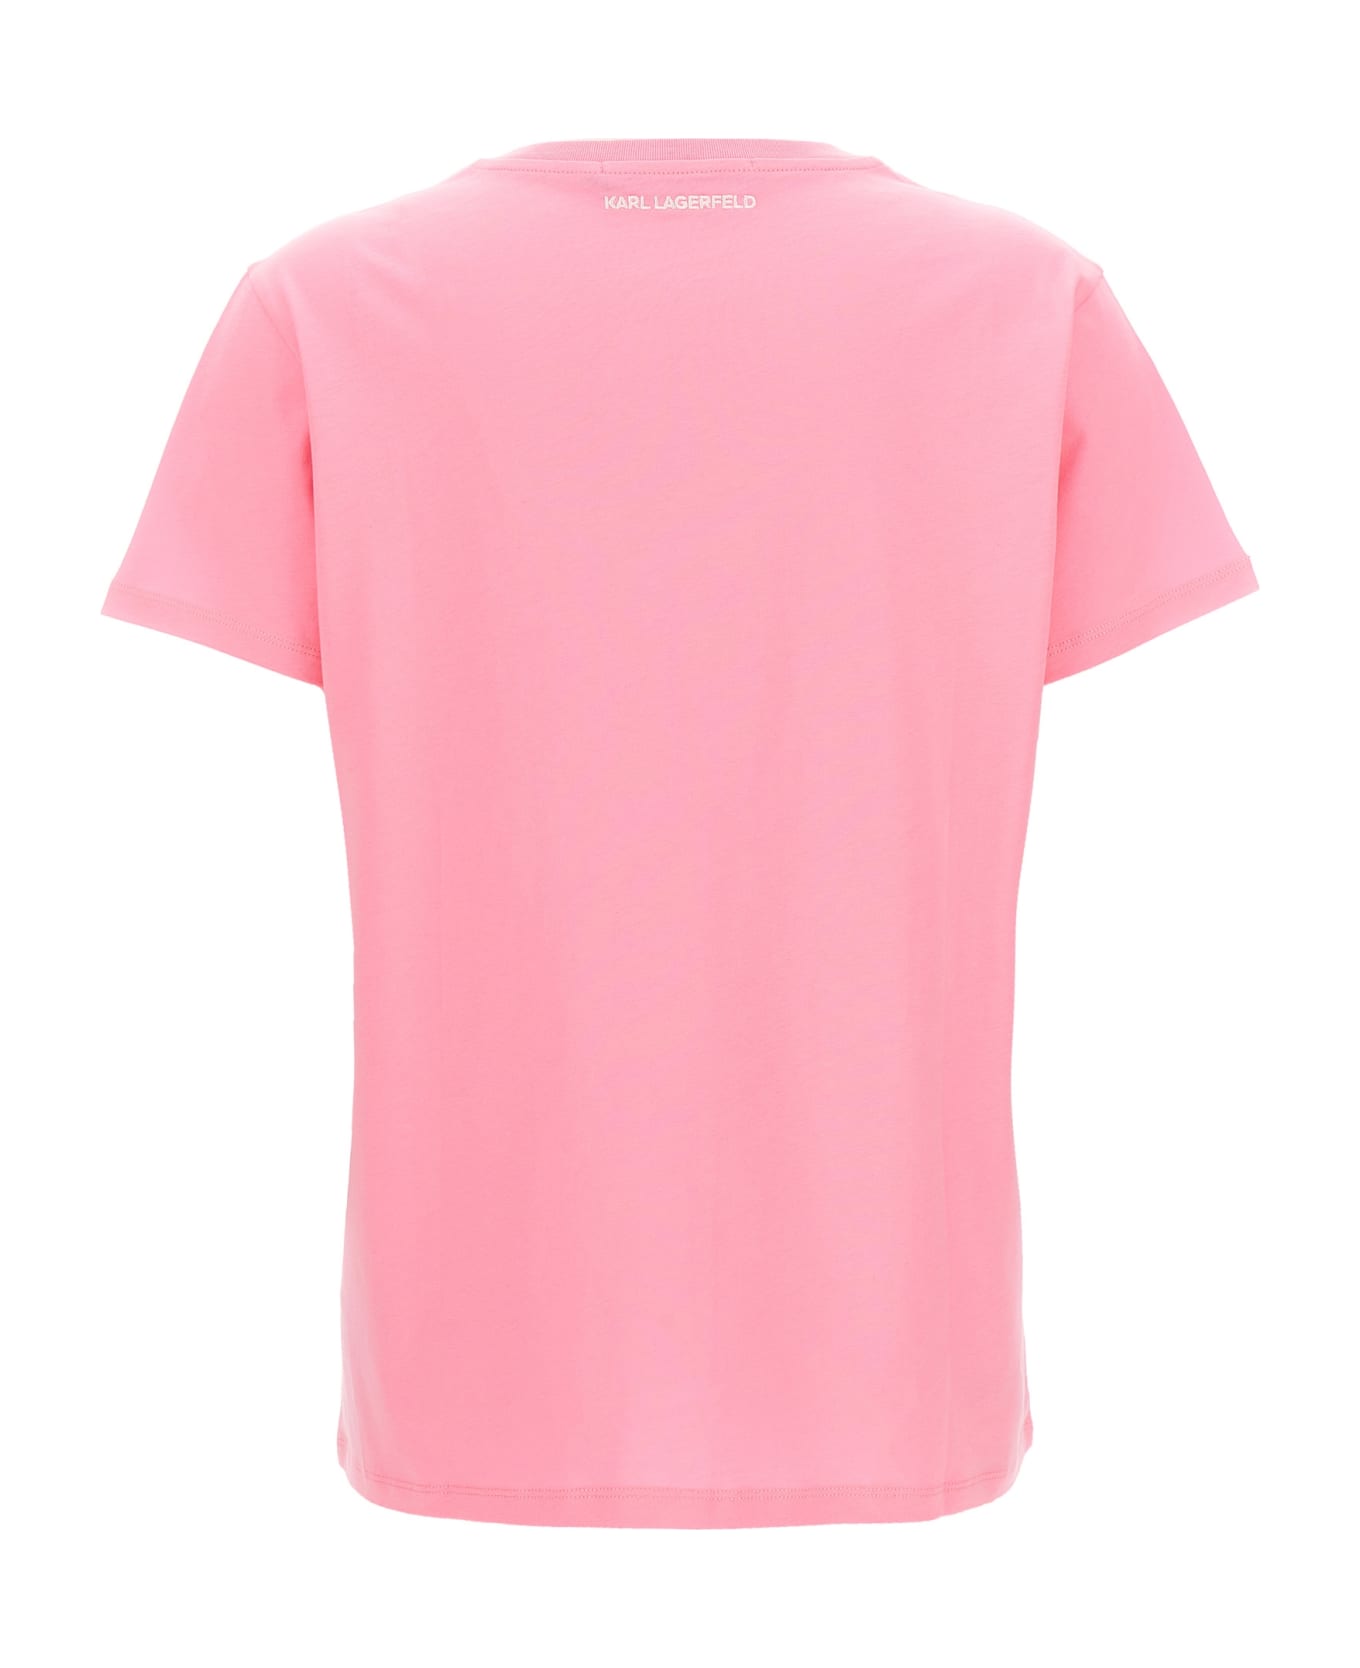 Karl Lagerfeld Logo T-shirt - Pink Tシャツ